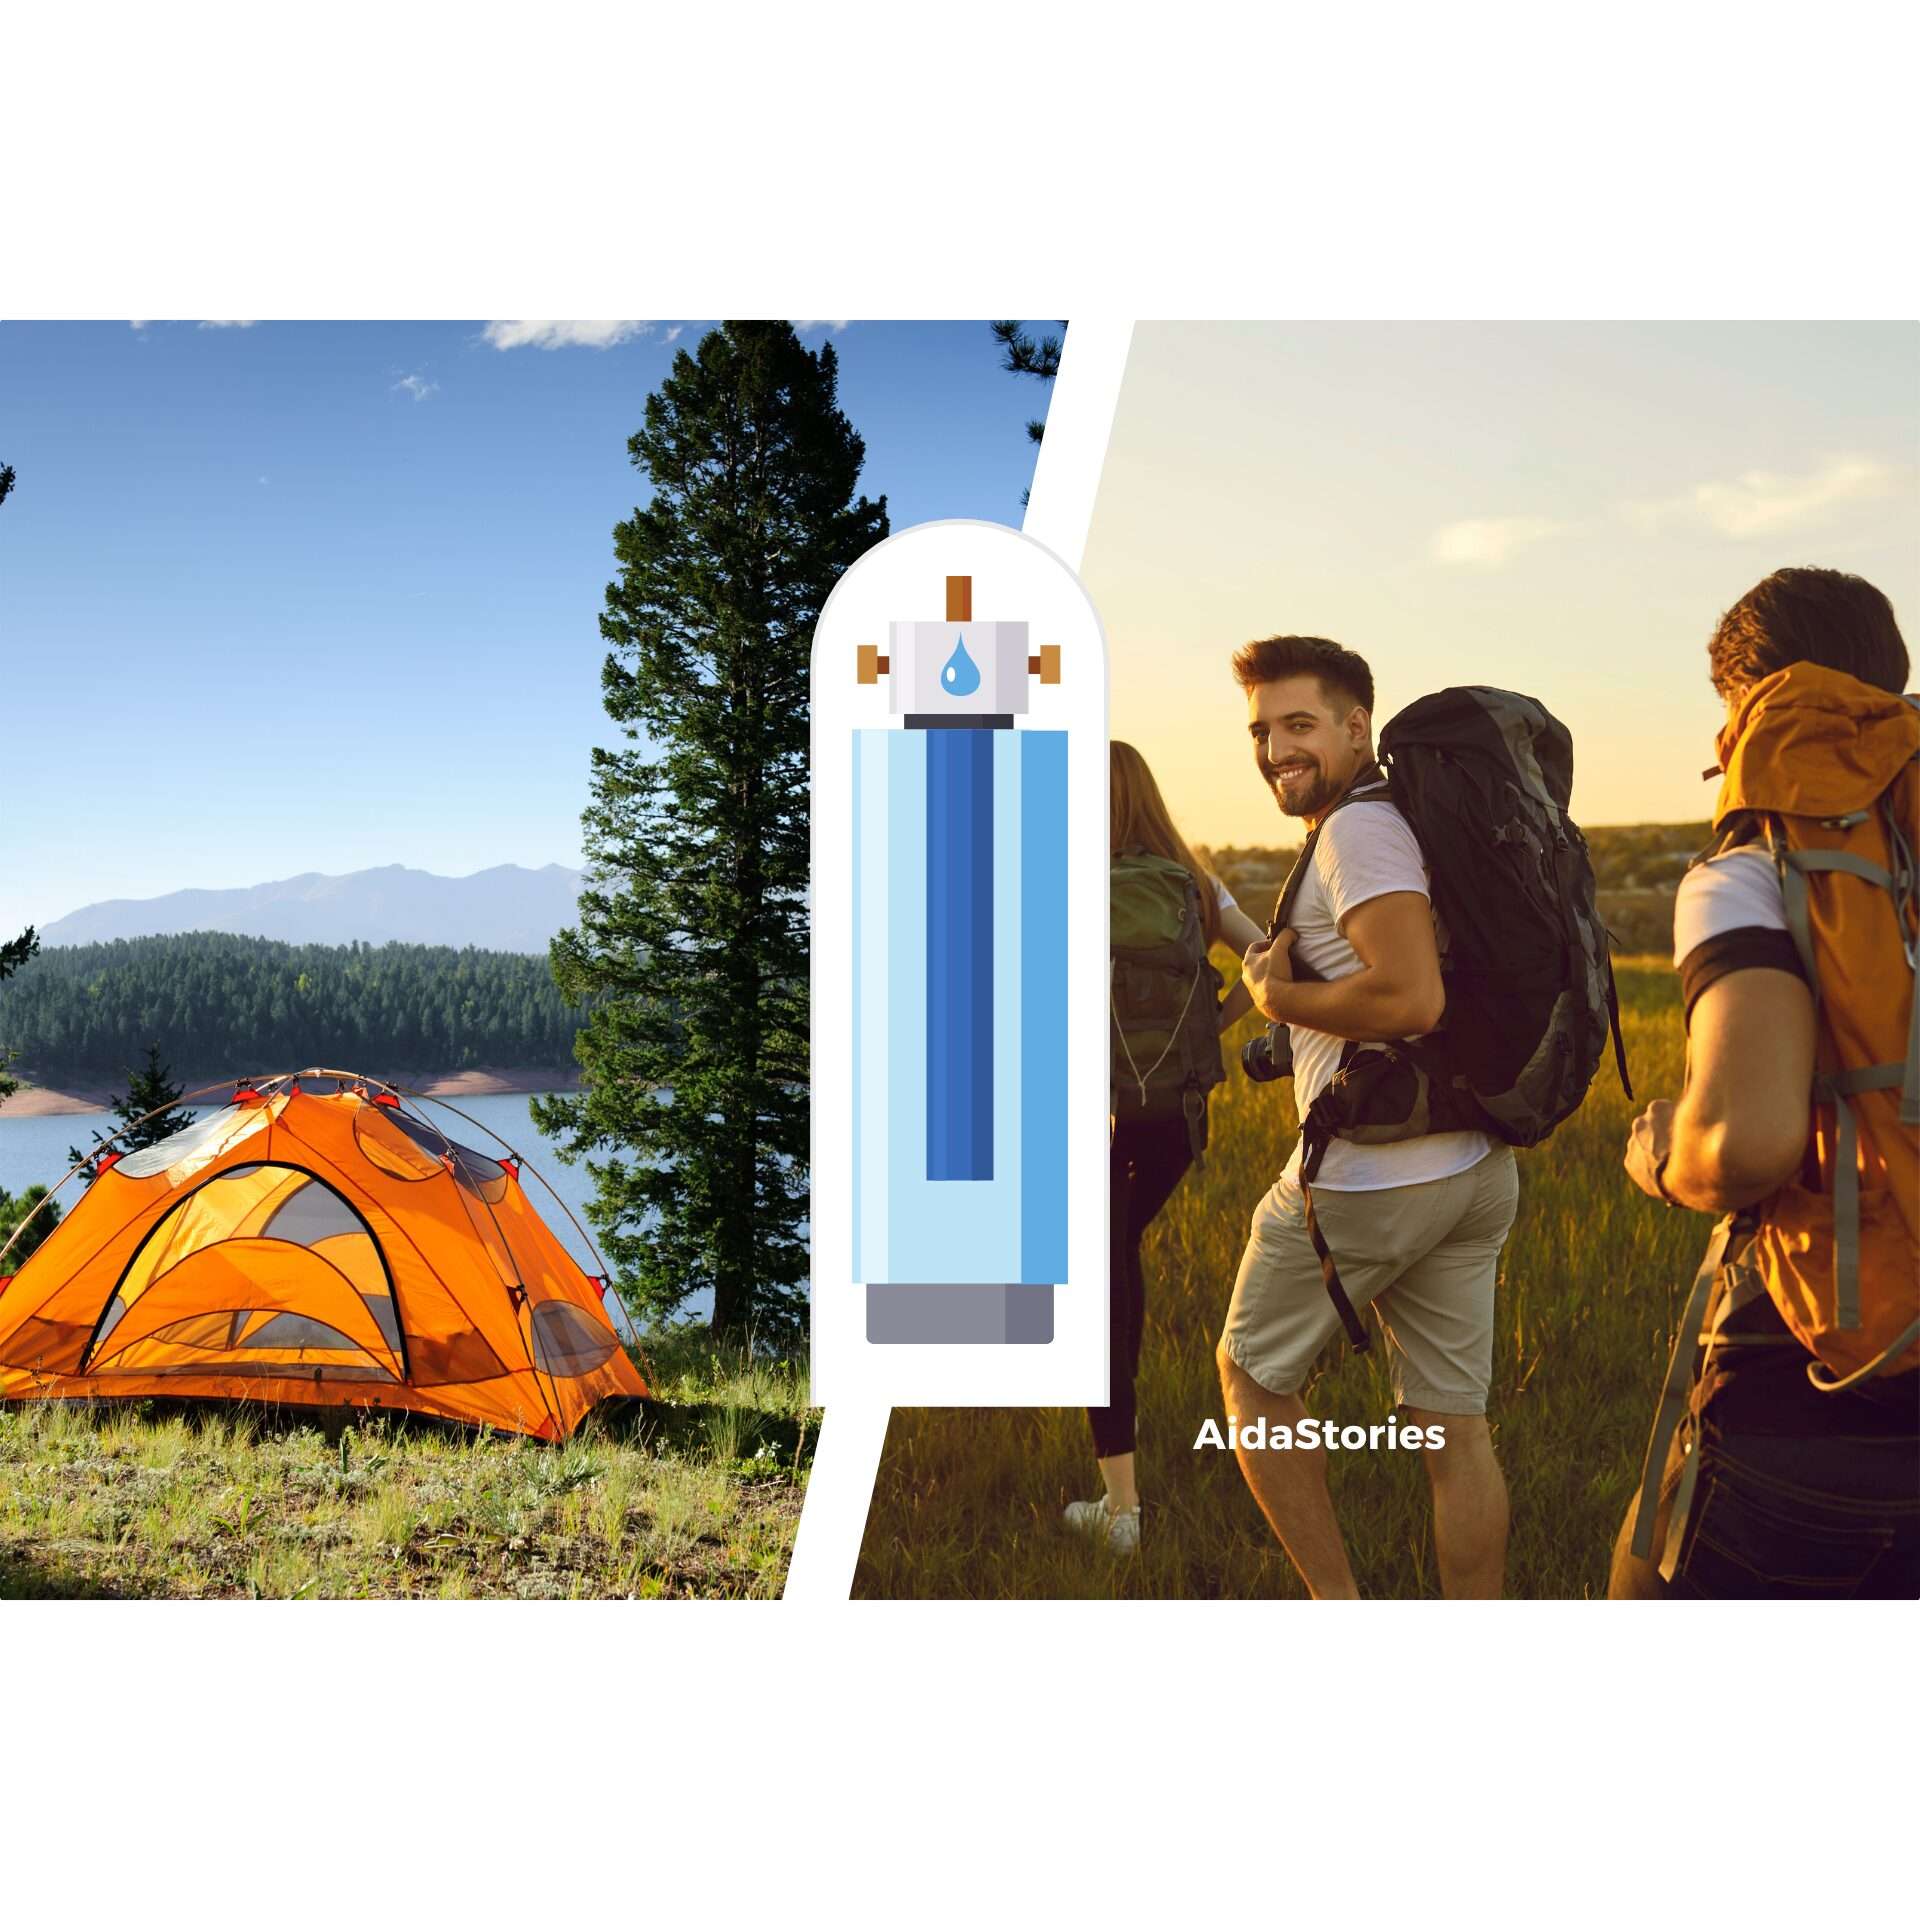 Personal-Water-Filter-Camping-Hiking-Travel-Emergency-Preparedness-apwfi01